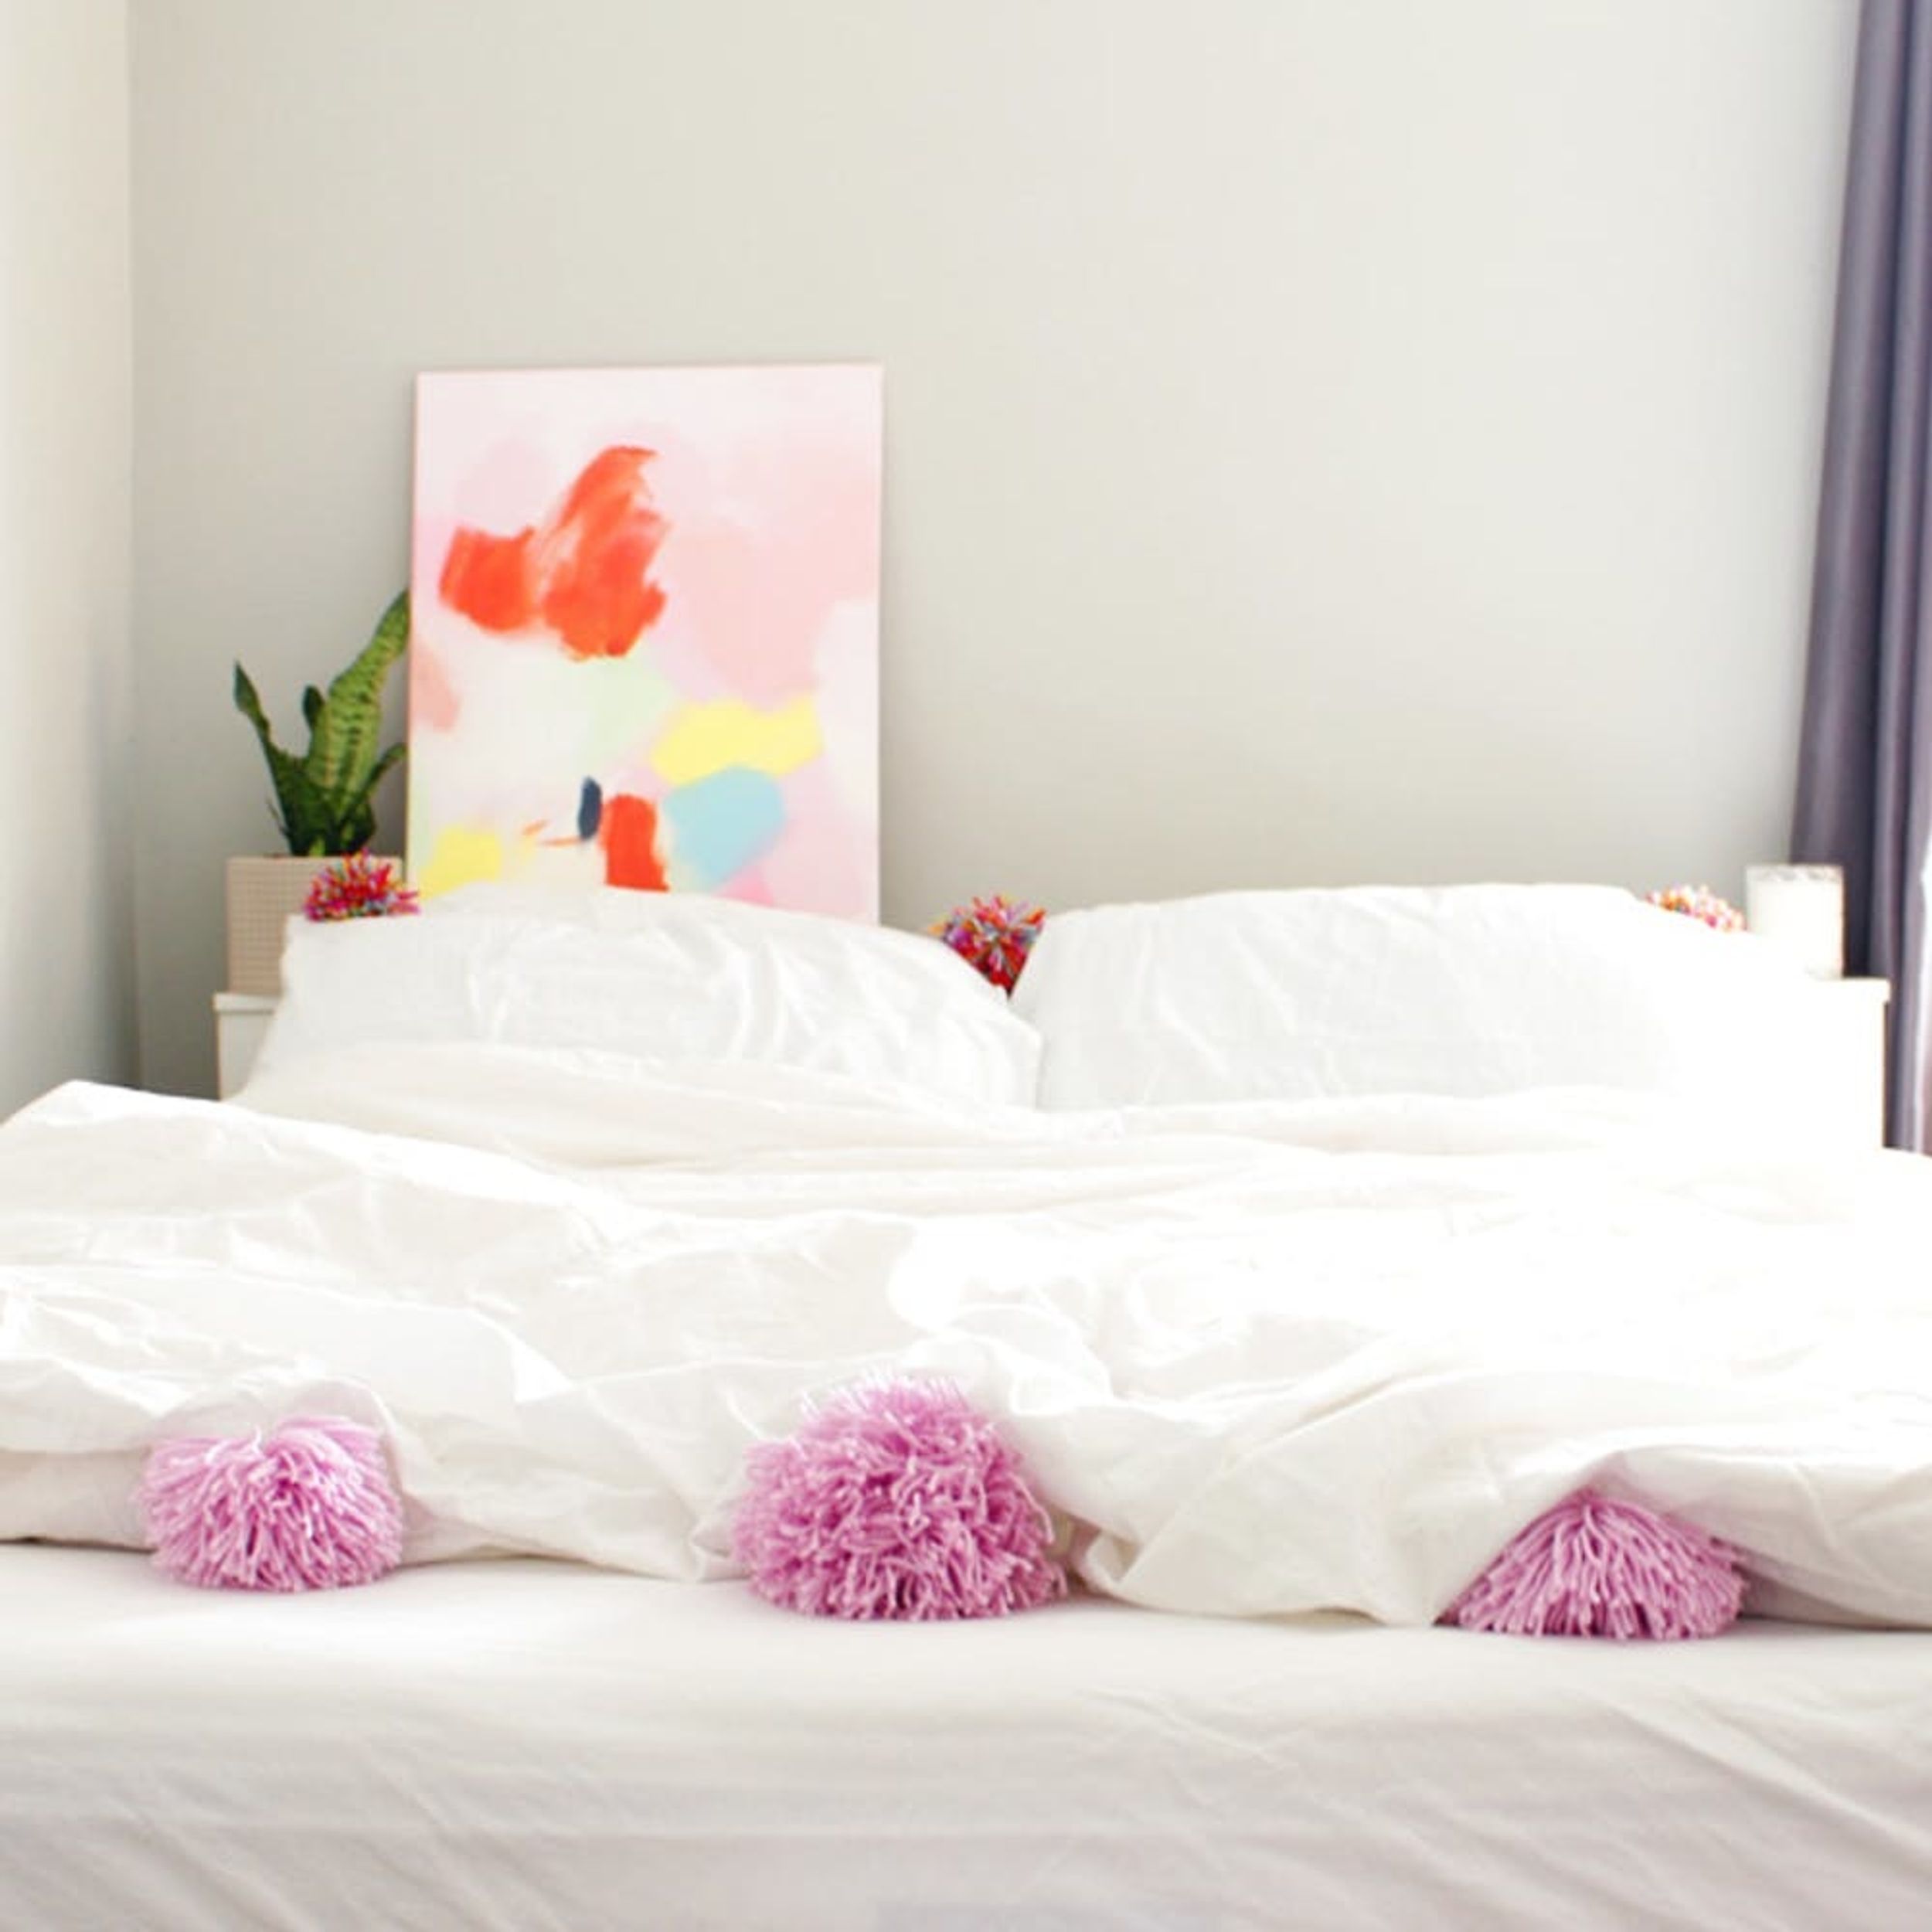 Upgrade Your Bedding With DIY Pom Pom Pillows and Duvet